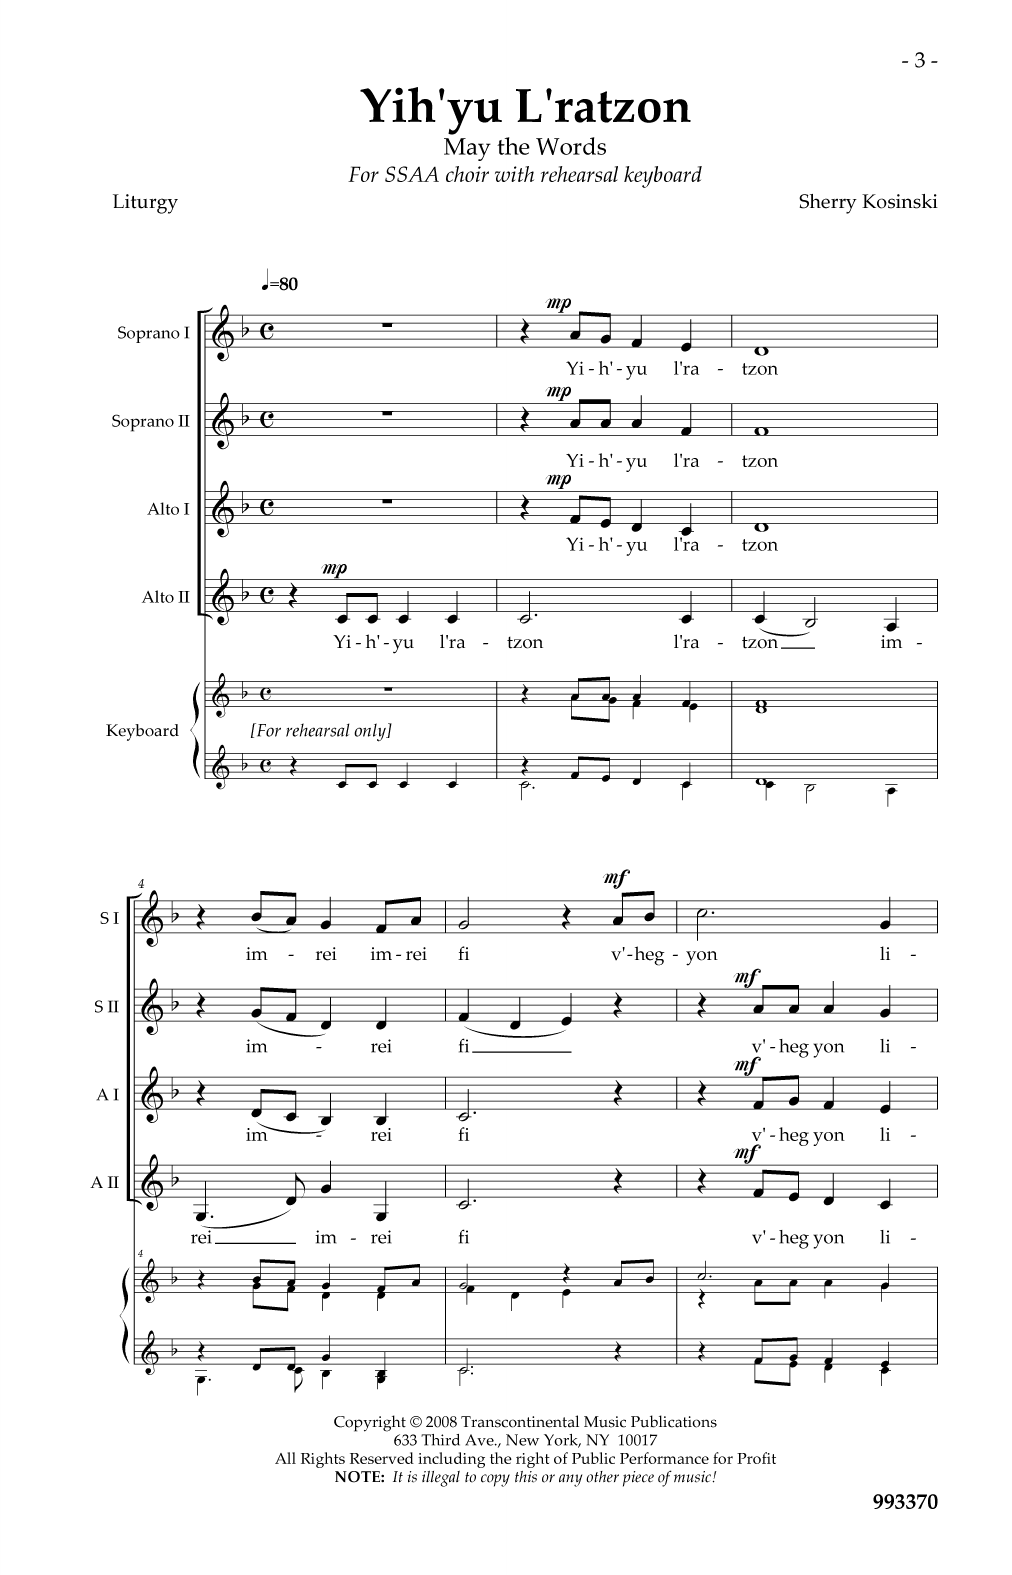 Sherry Kosinski Yih'yu L'ratzon (May the Words) Sheet Music Notes & Chords for SSAA Choir - Download or Print PDF